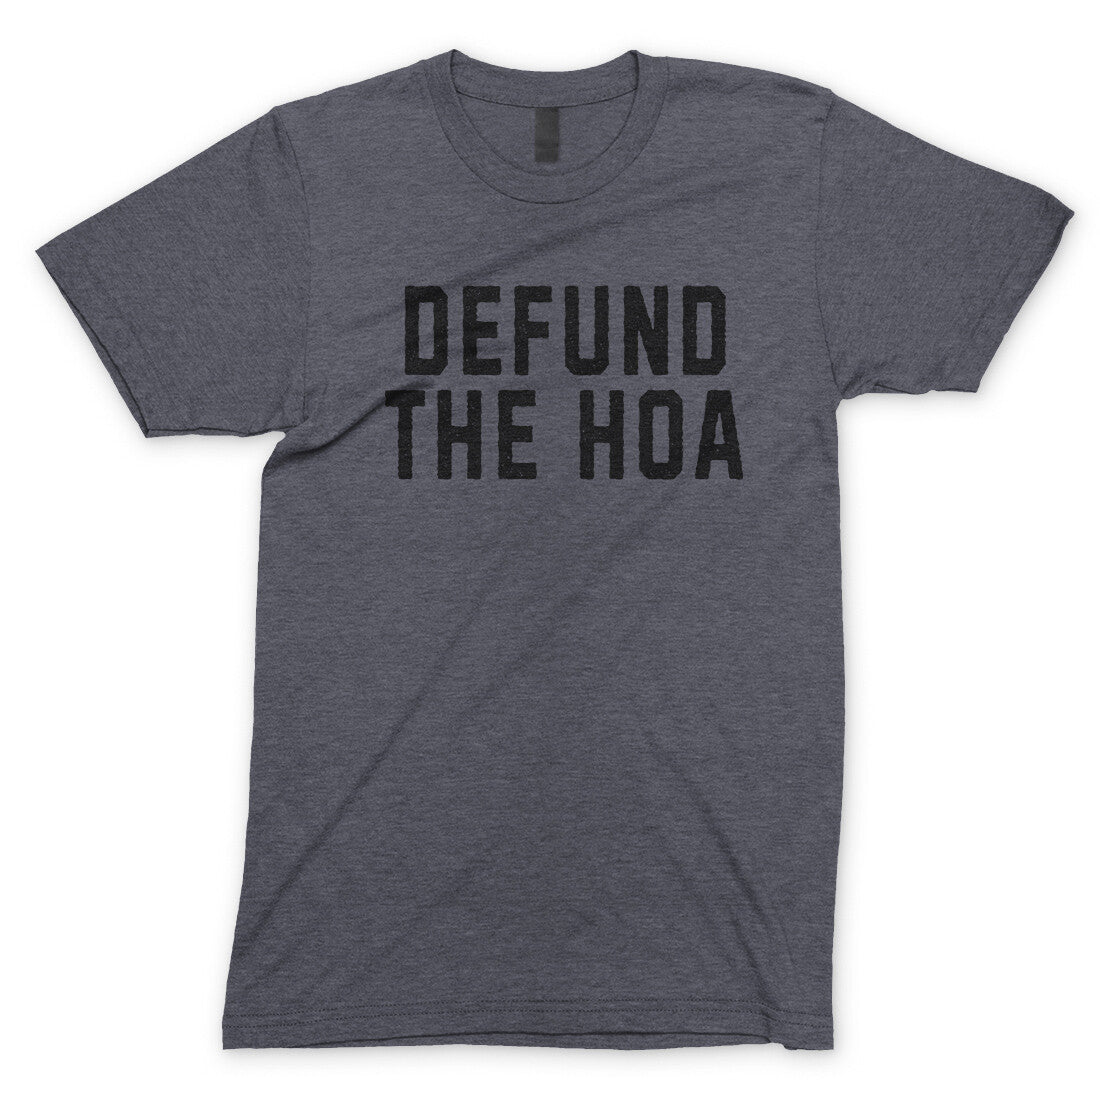 Defund the HOA in Dark Heather Color